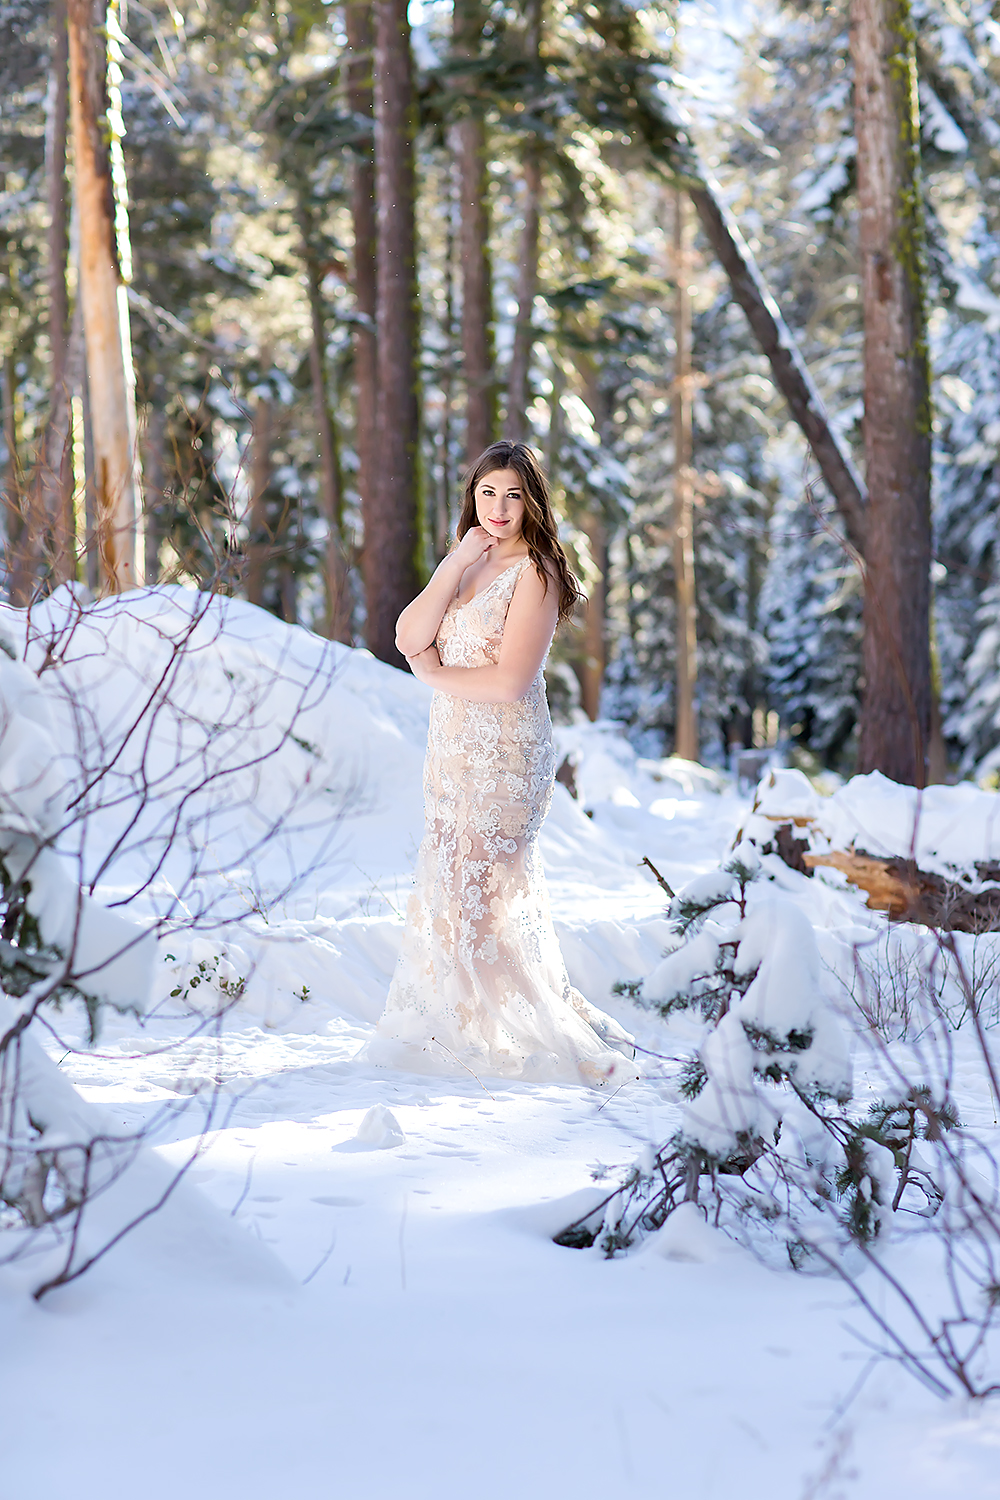 Senior Model team destination session in snow in Tahoe, California by El Dorado Hills senior Photographer Colleen Sanders, formal, prom dress, winter.